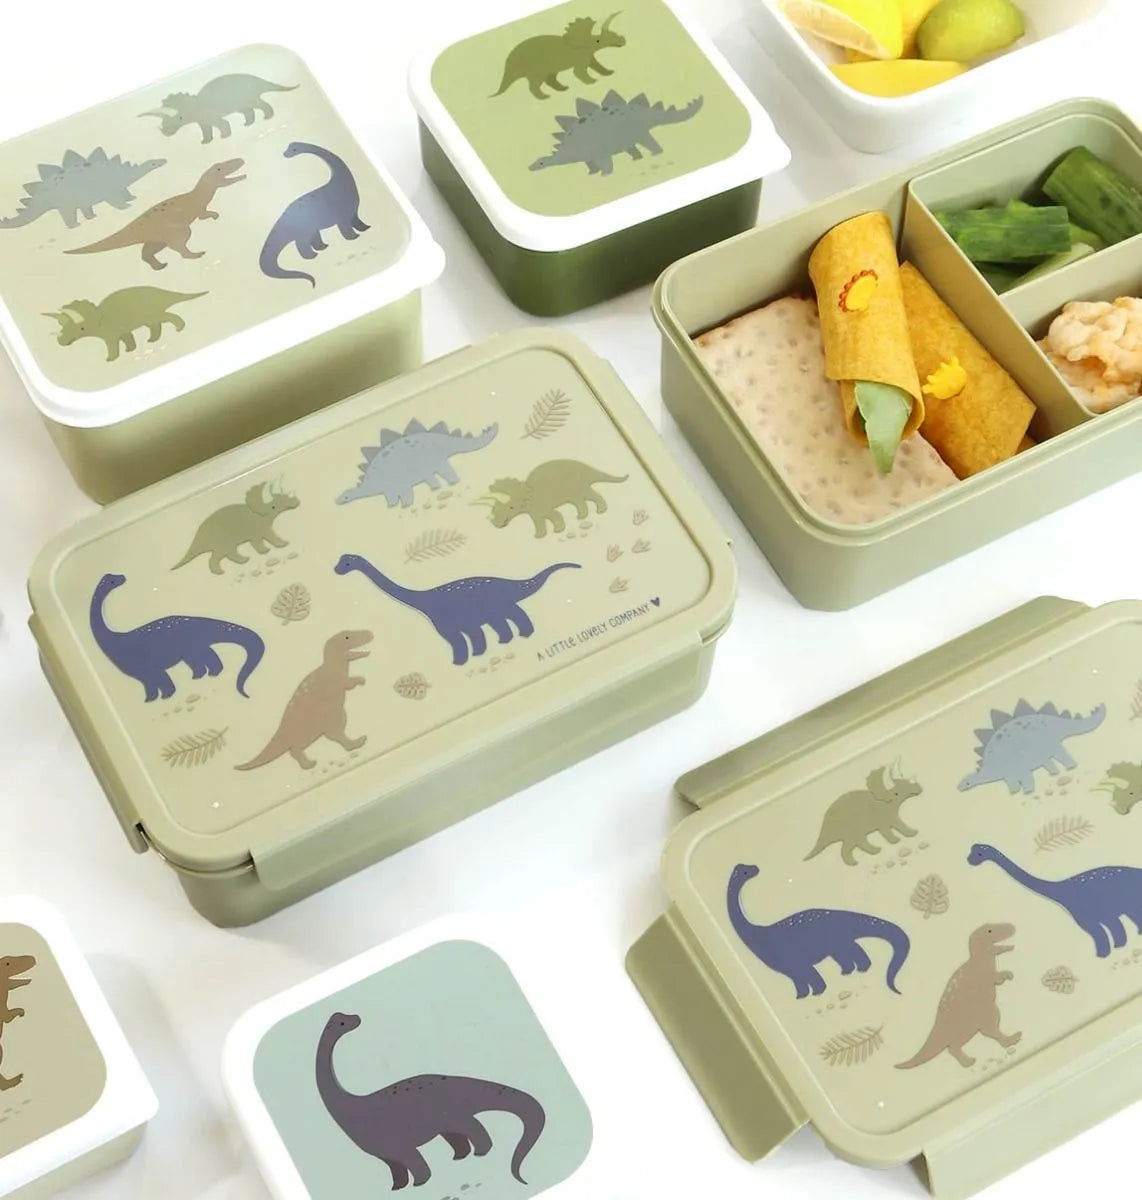 A Little Lovely Company A Little Lovely Company Bento Lunchbox Dinosaurussen - Decomusy